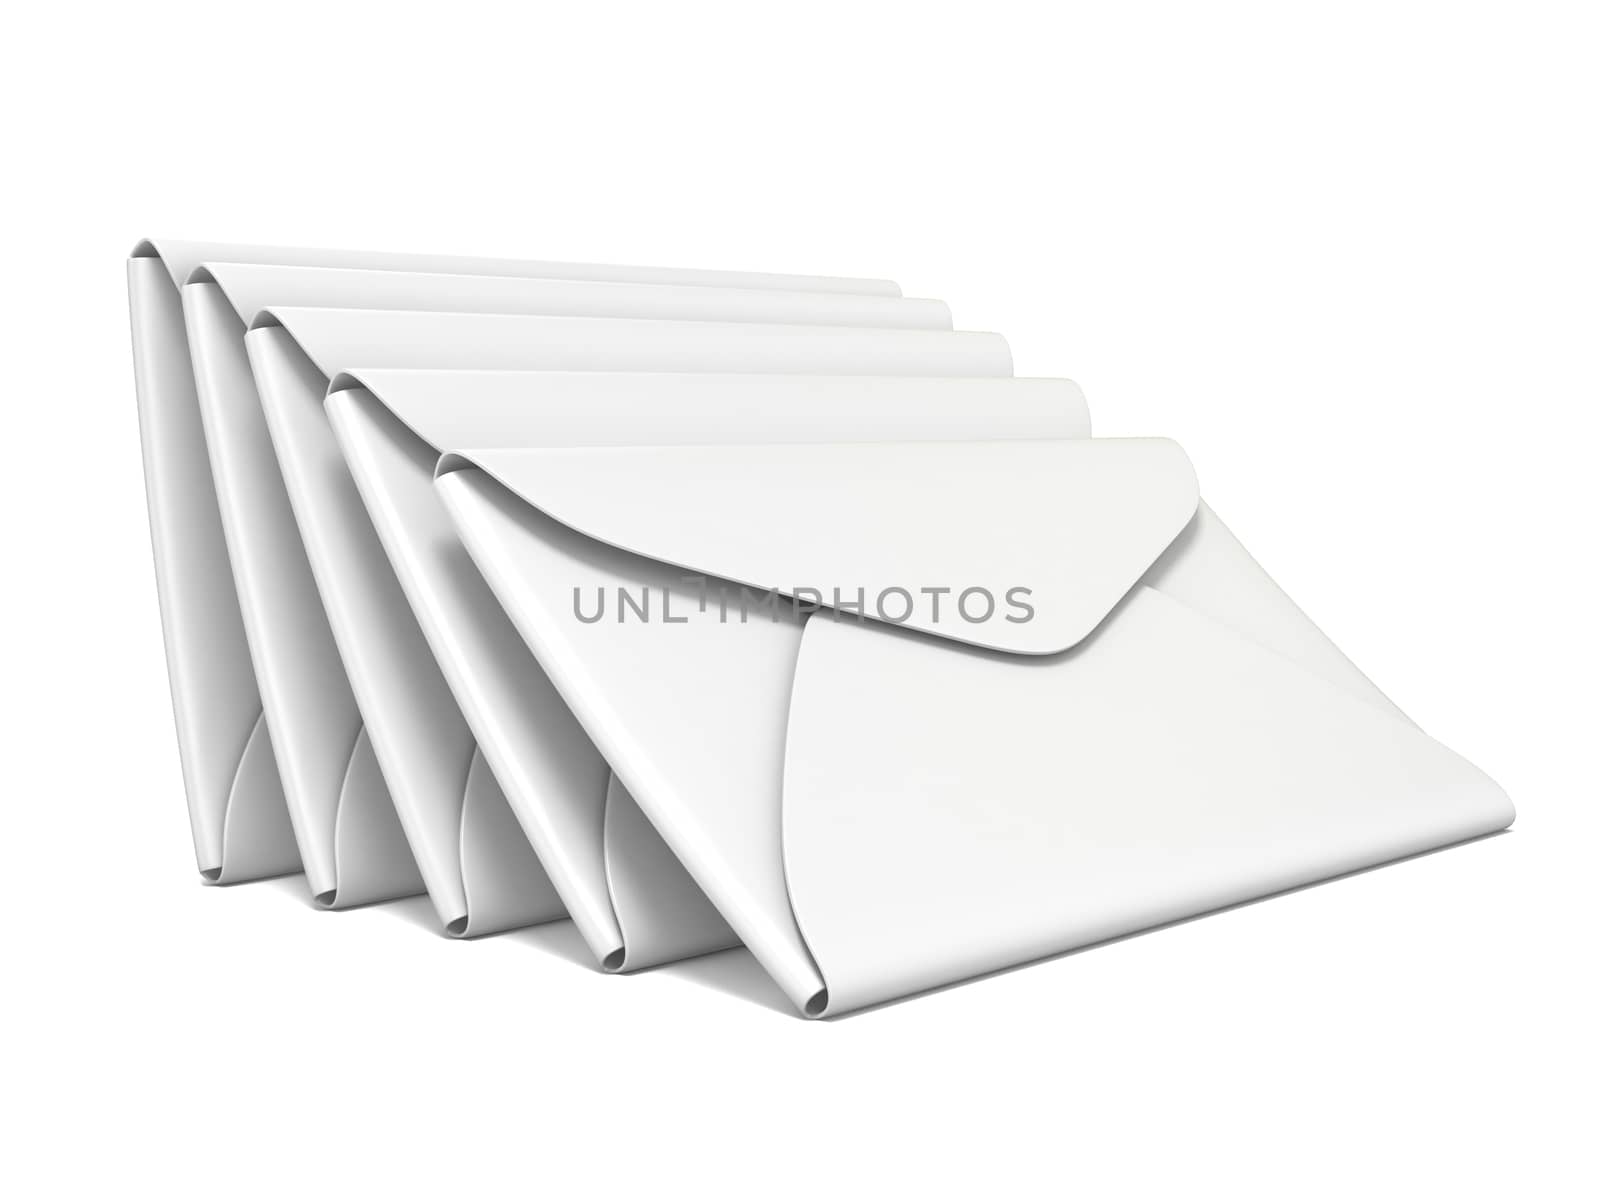 Stack of white, blank envelopes. 3D rendering illustration isolated on white background